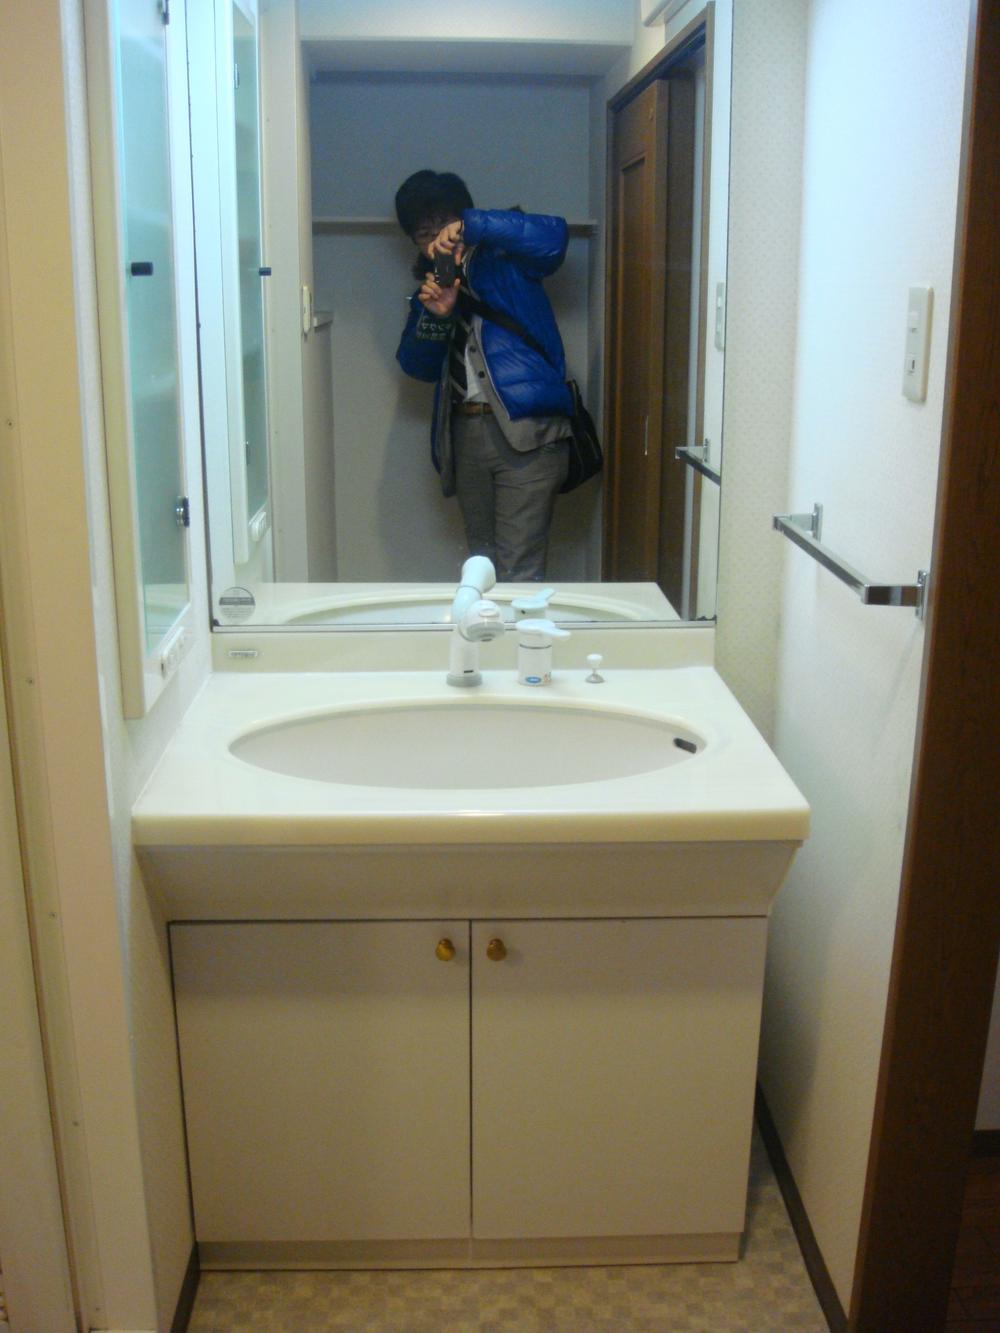 Wash basin, toilet. 2013 December 23, shooting